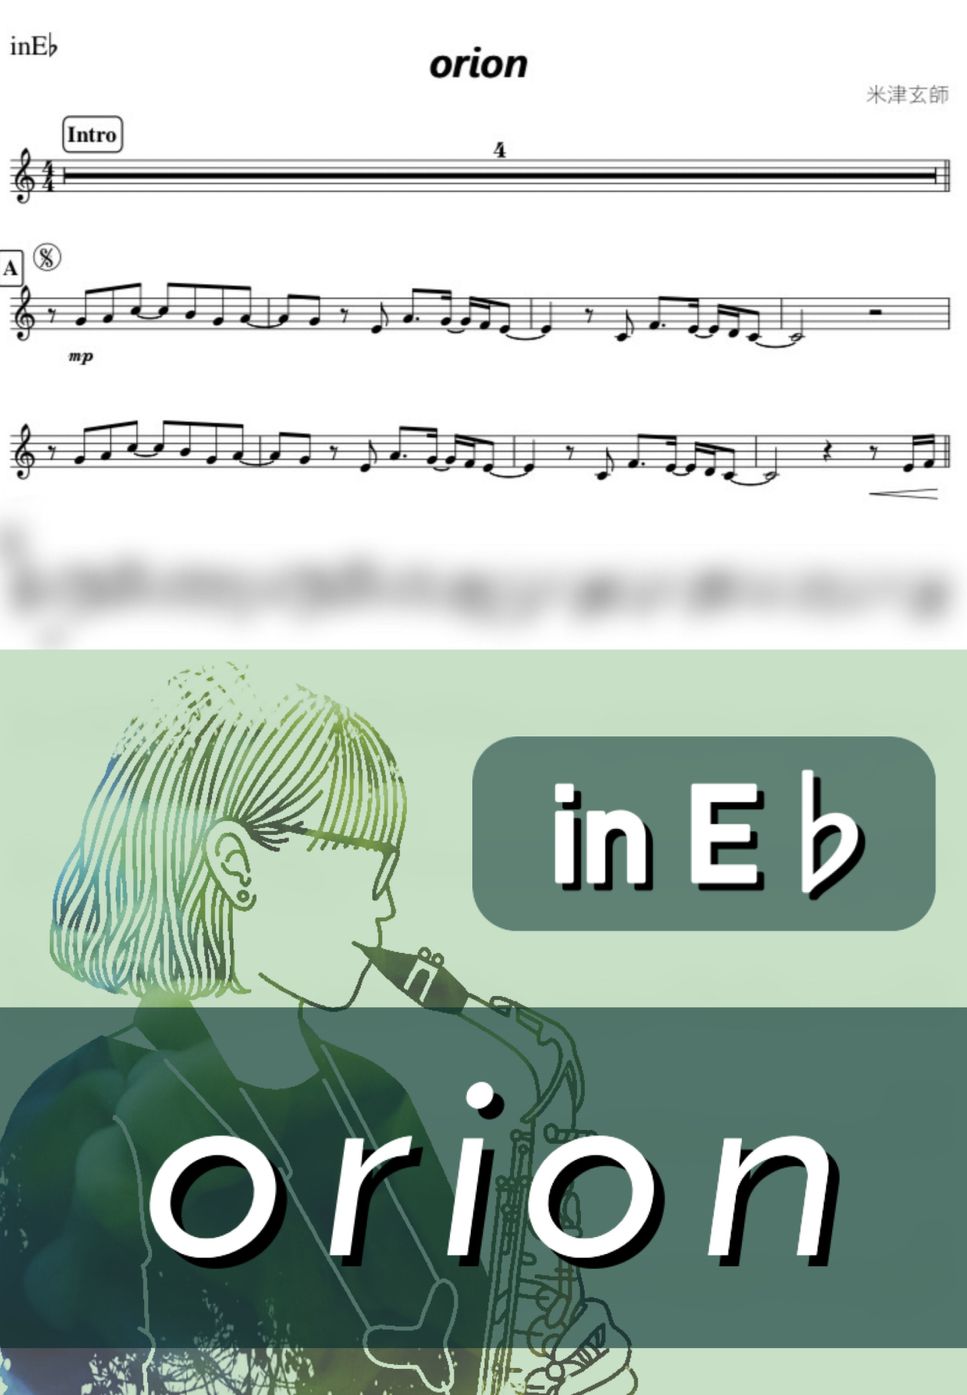 米津玄師 - orion (E♭) by kanamusic